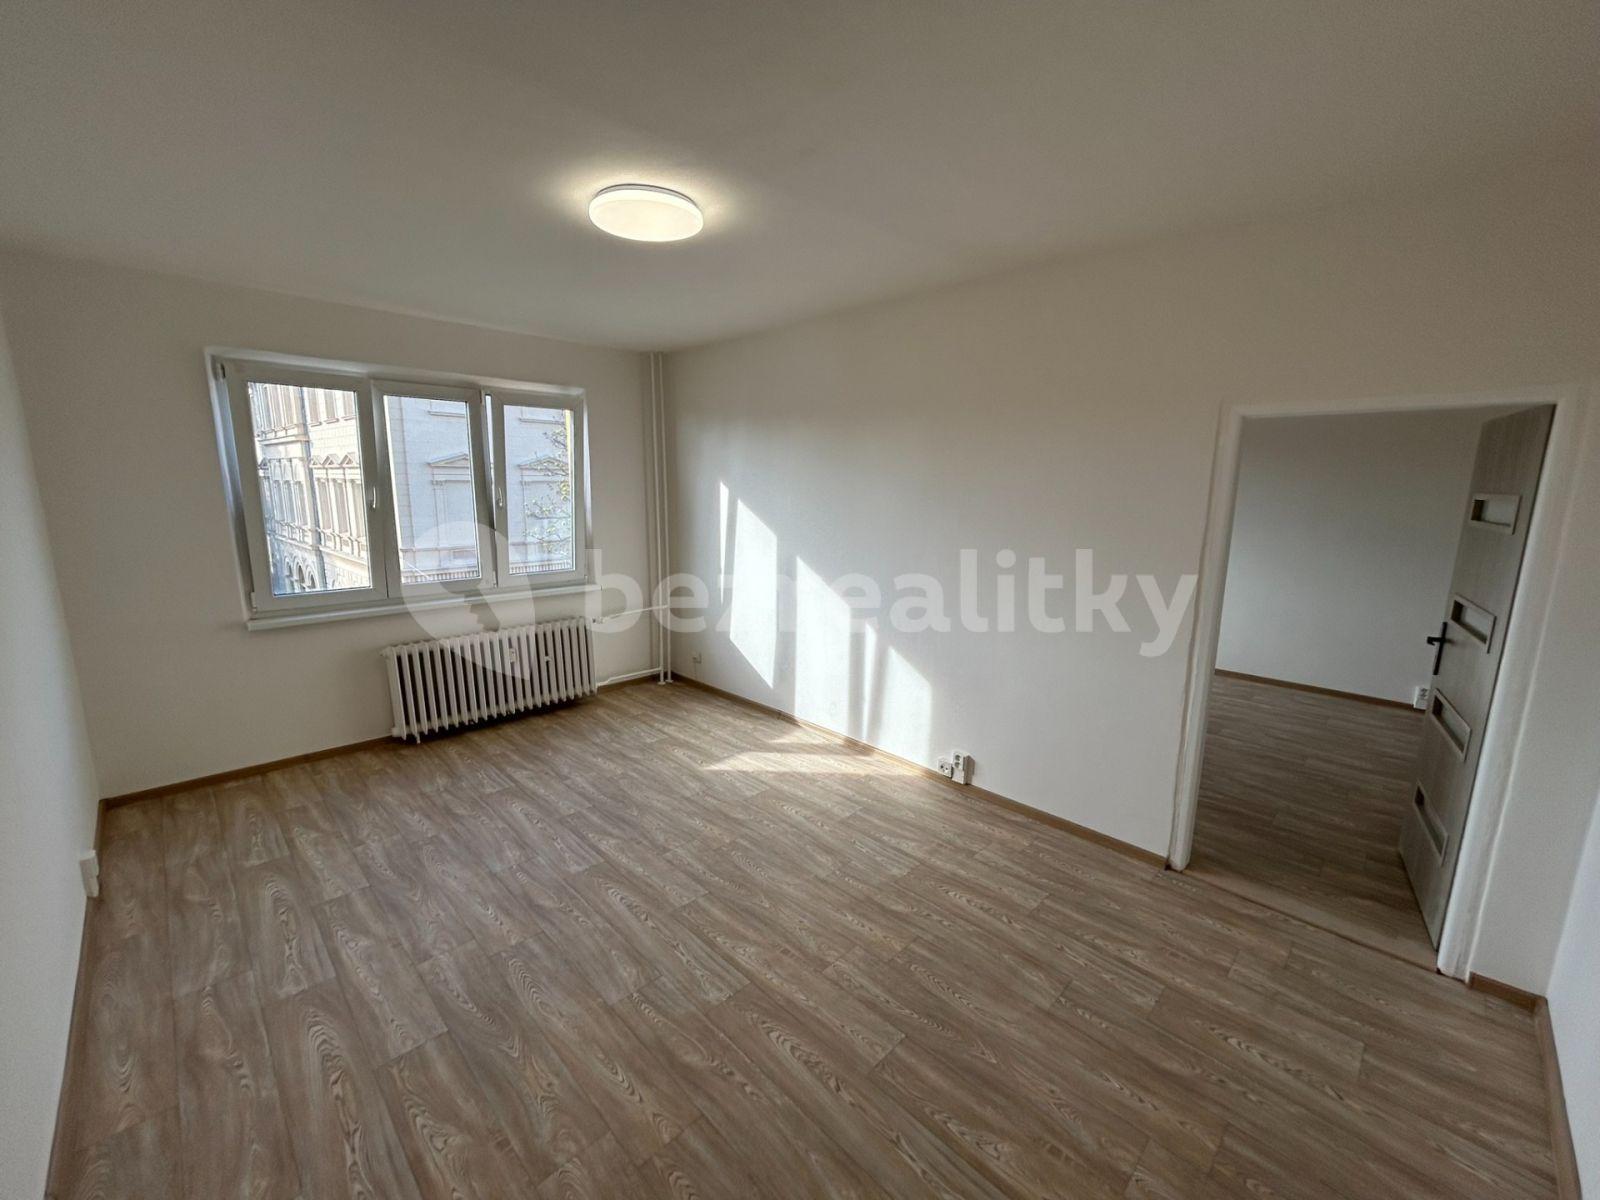 2 bedroom flat to rent, 59 m², Komenského, Kadaň, Ústecký Region